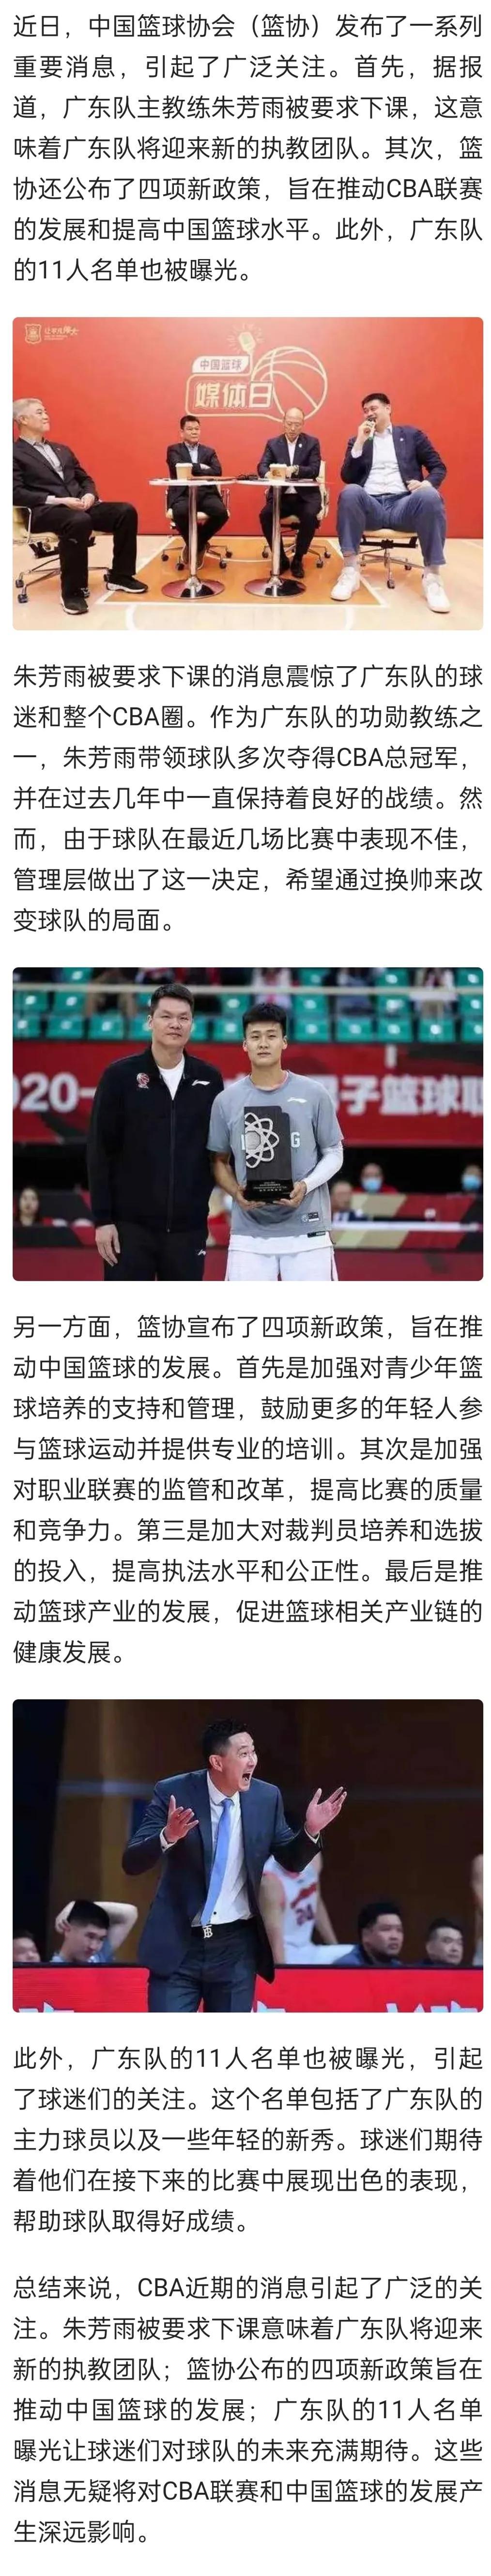 CBA震动！广东队换帅，朱芳雨被要求下课；篮协揭秘四大新政。

近日，中国篮球协